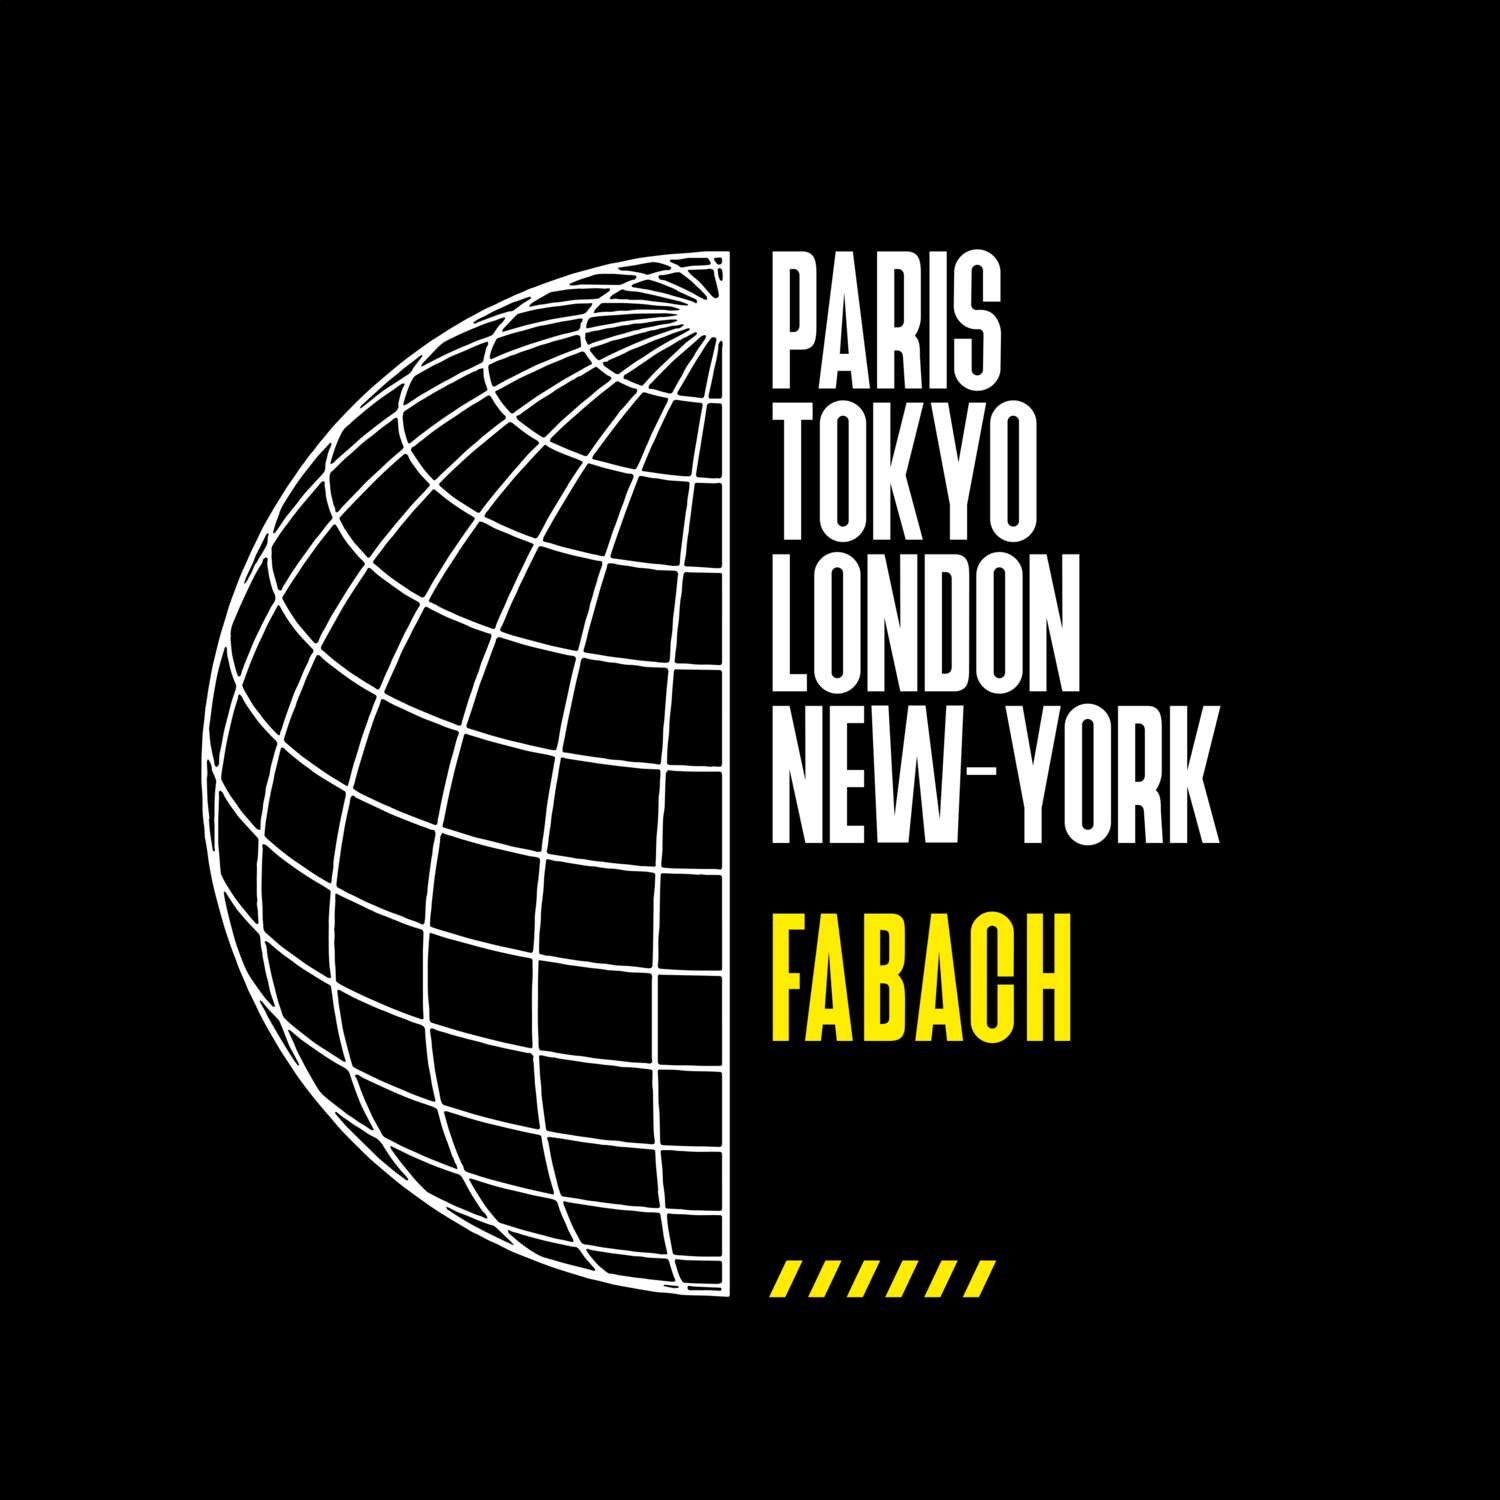 Fabach T-Shirt »Paris Tokyo London«